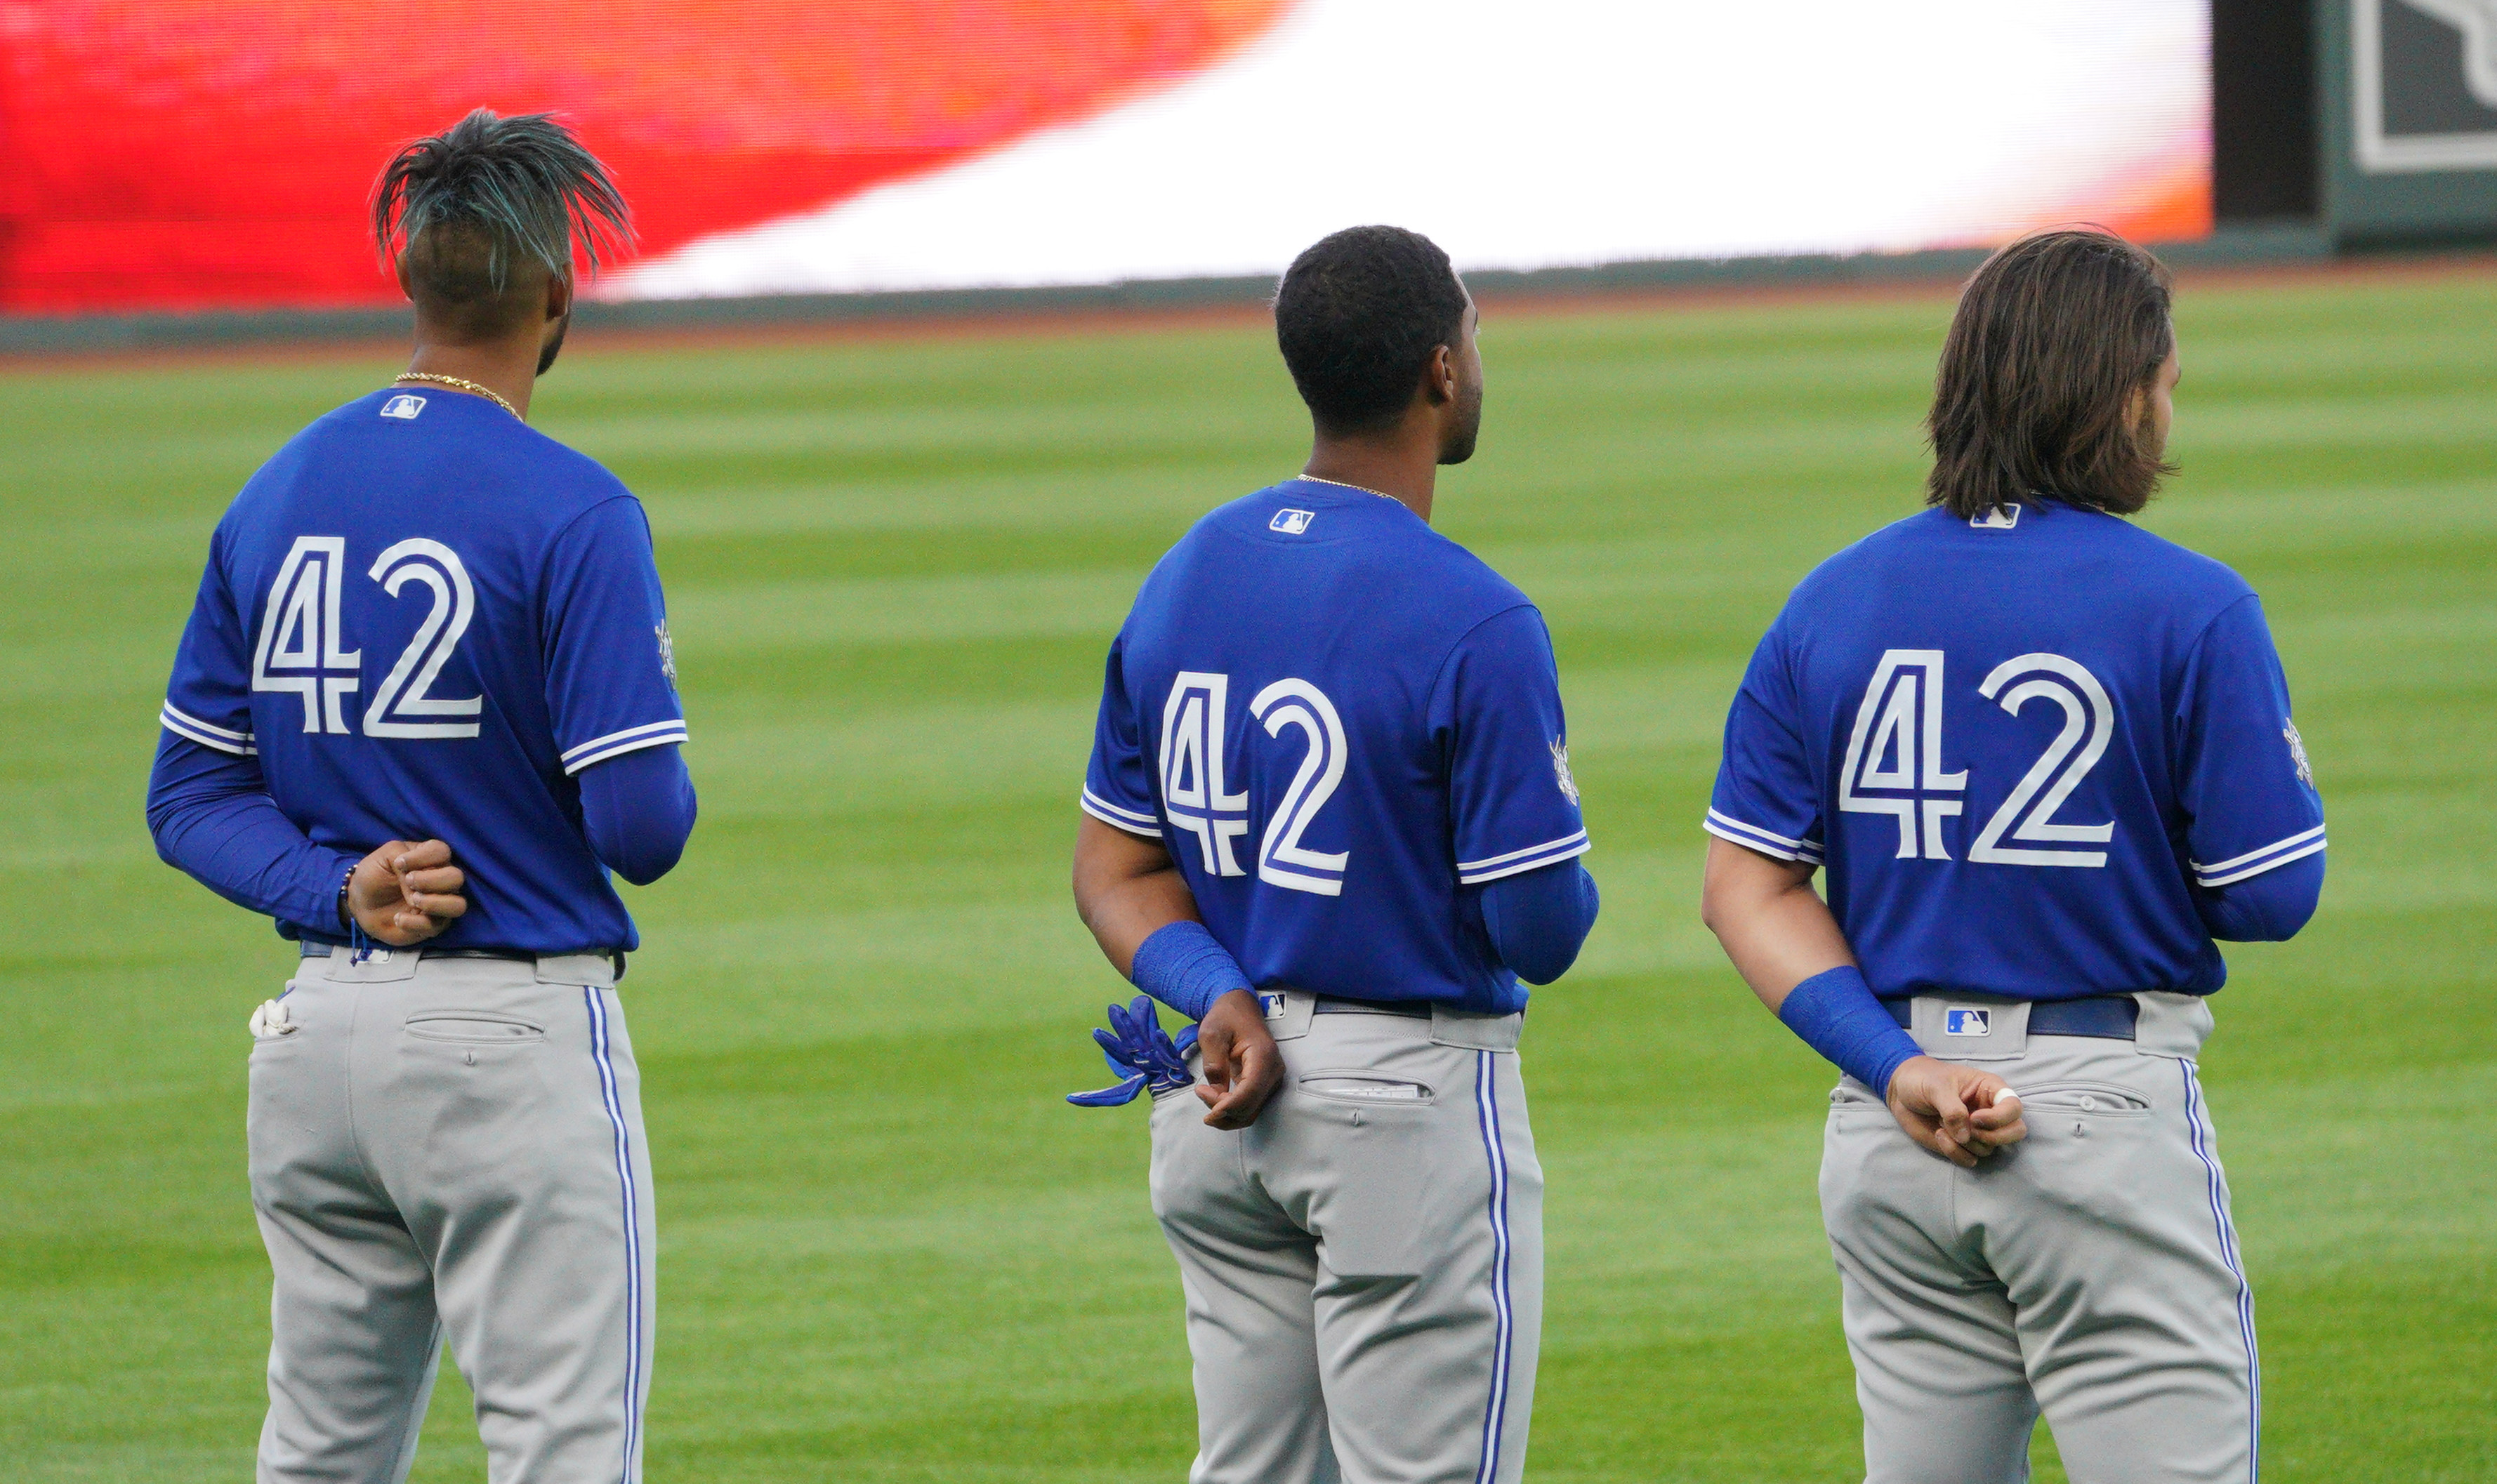 MLB: Toronto Blue Jays at Kansas City Royals